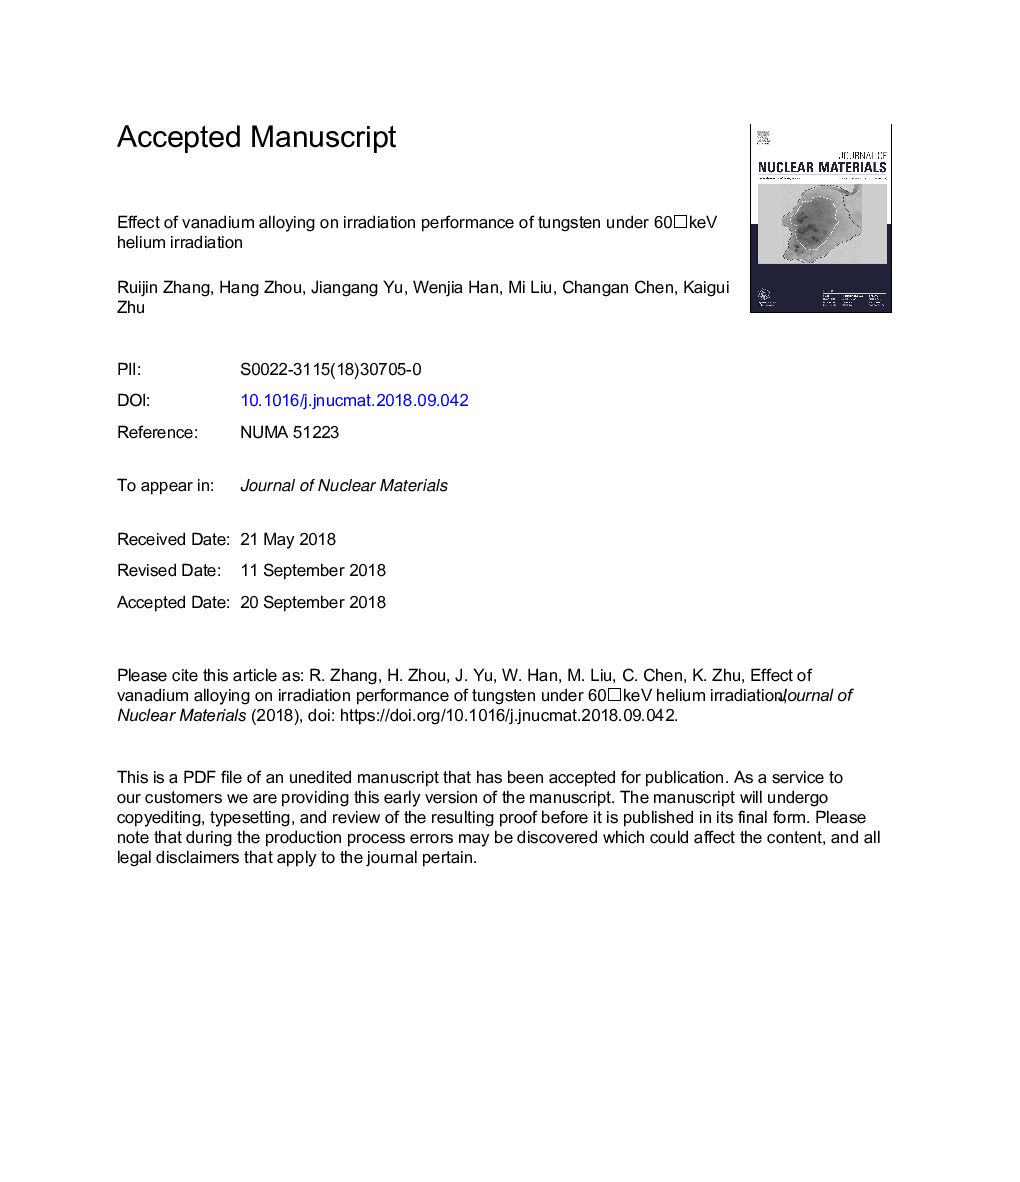 Effect of vanadium alloying on irradiation performance of tungsten under 60â¯keV helium irradiation